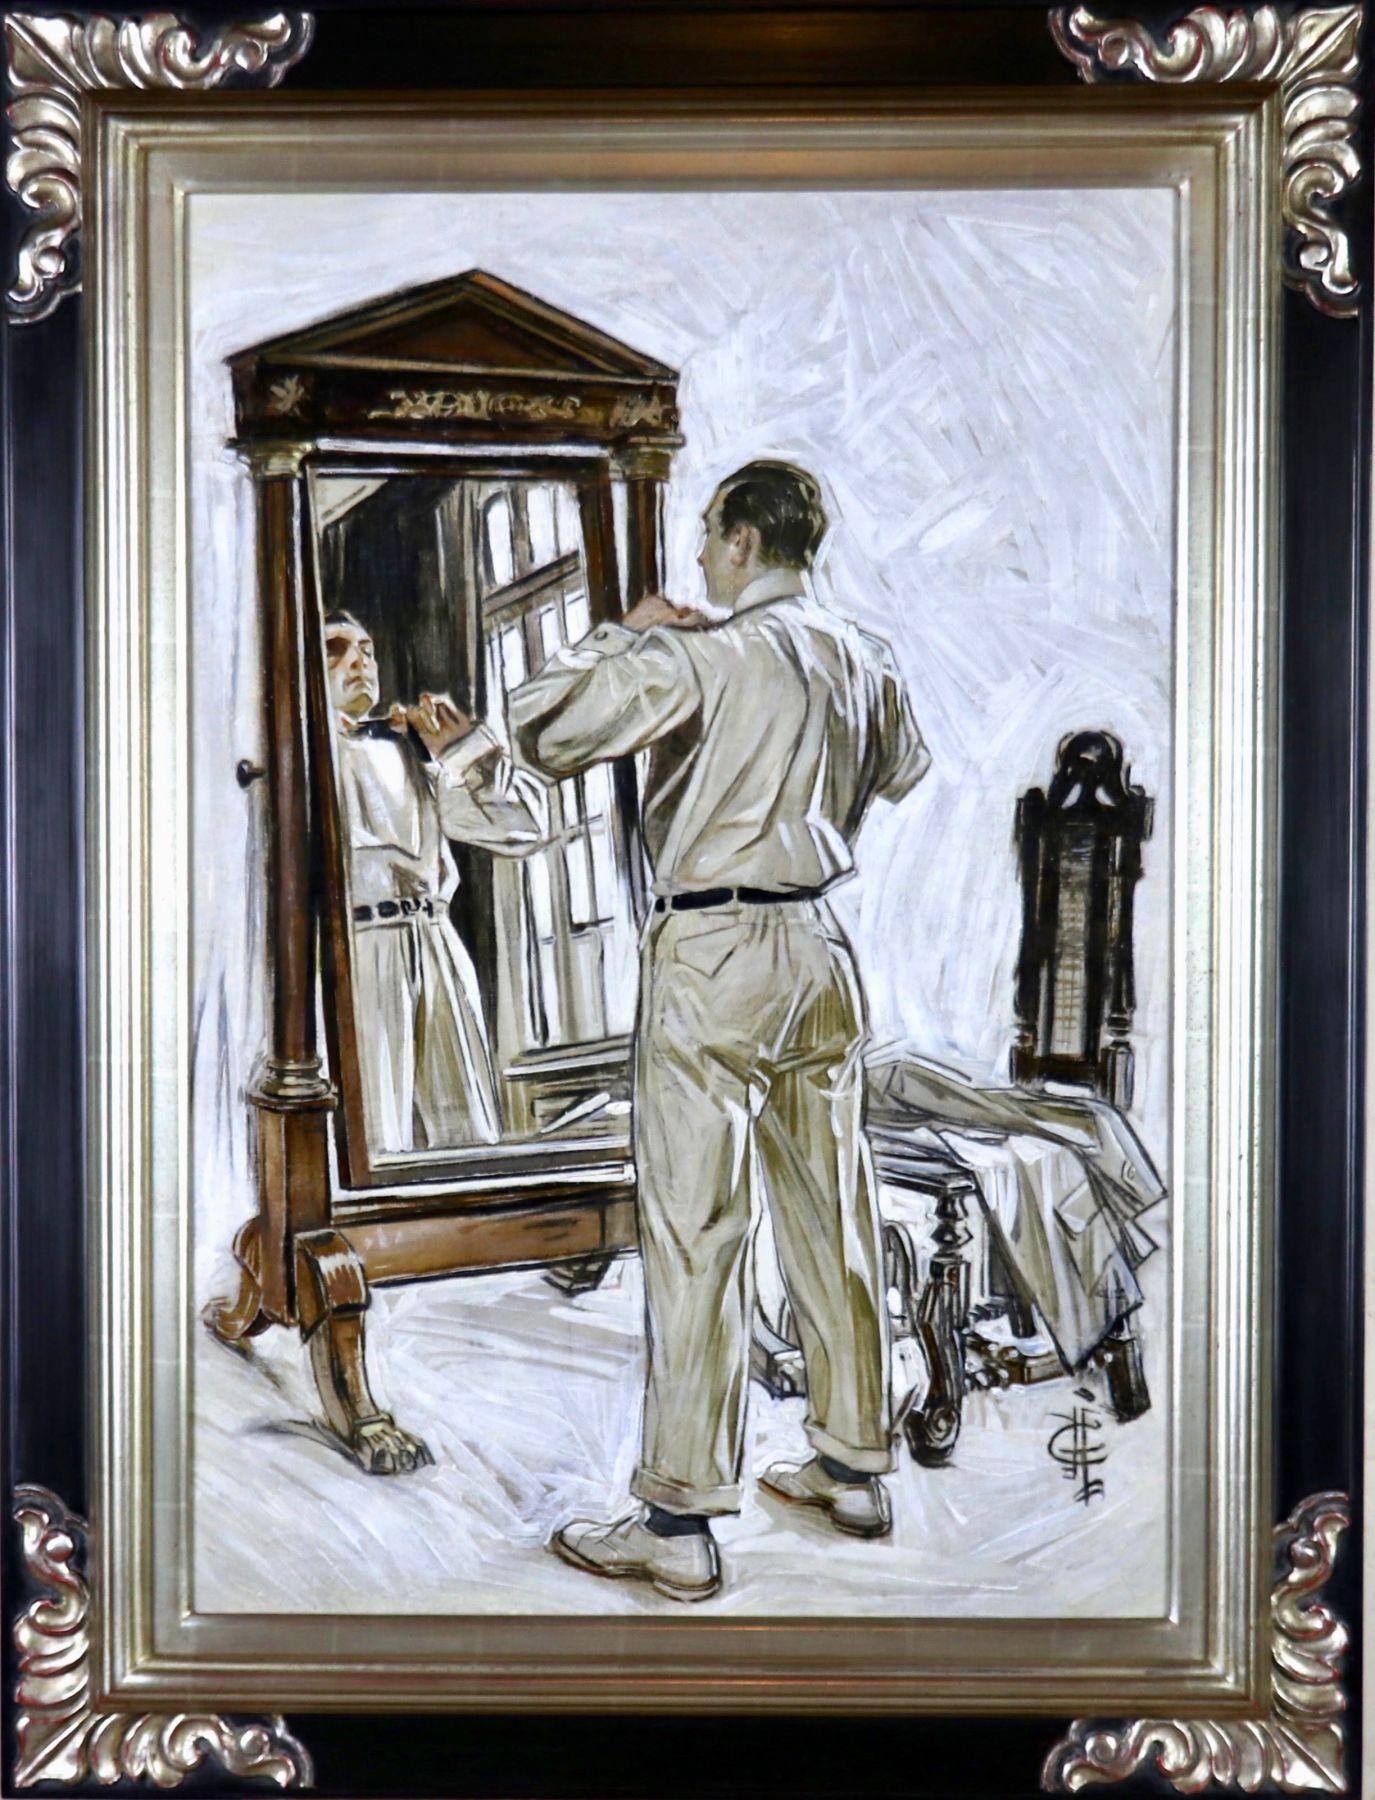 Man Dressing in Mirror - Painting by Joseph Christian Leyendecker